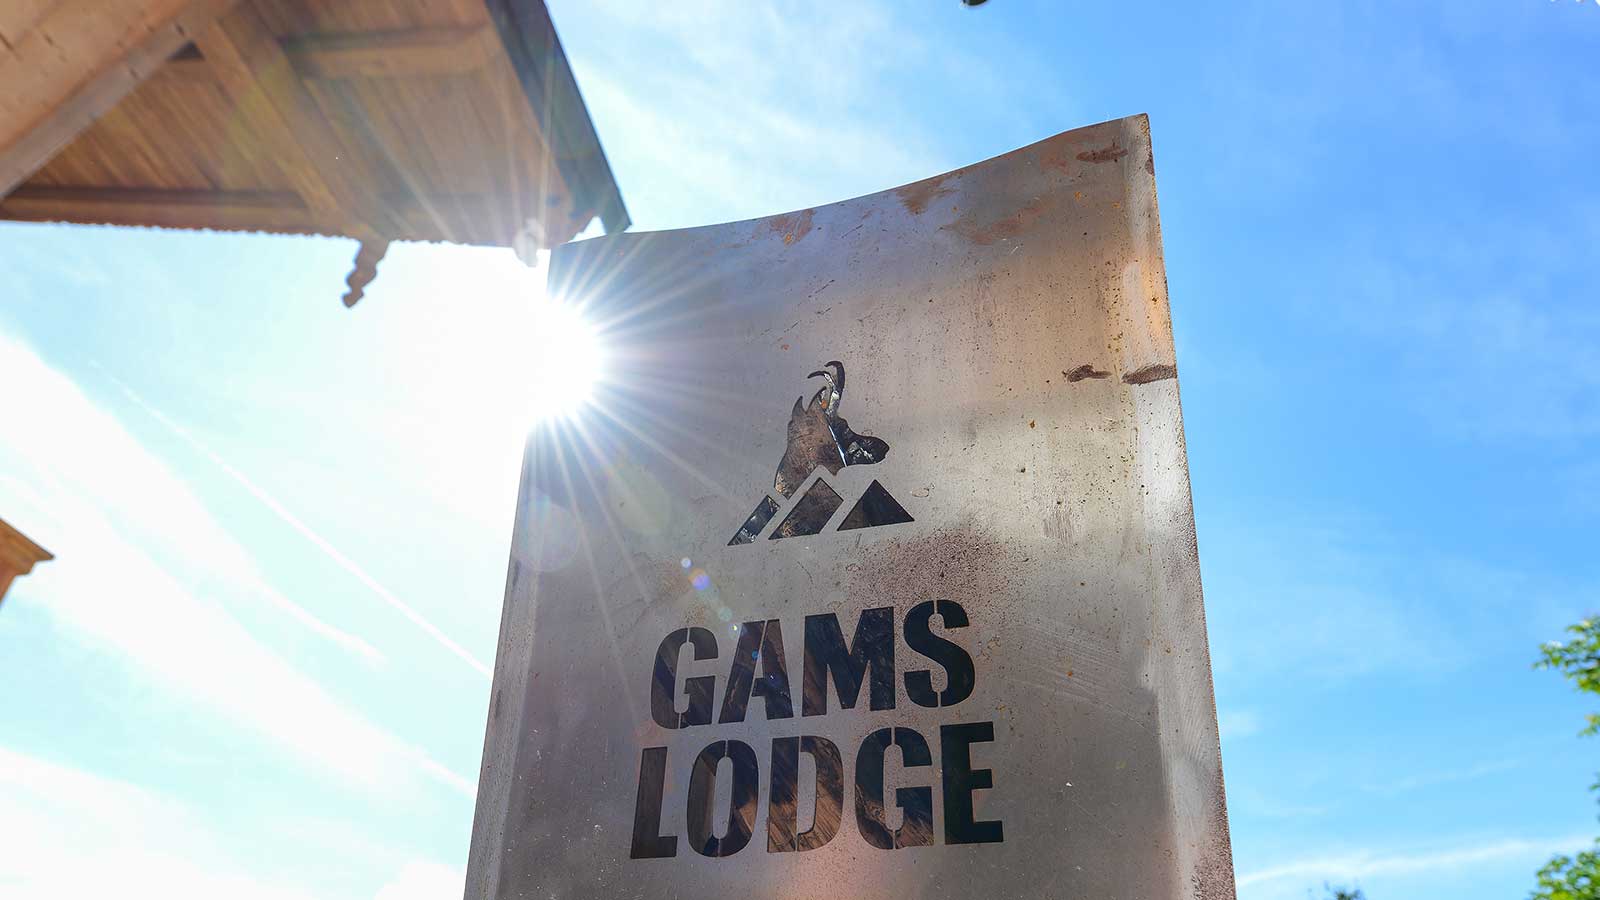 Gamslodge - Chalets in Goldegg